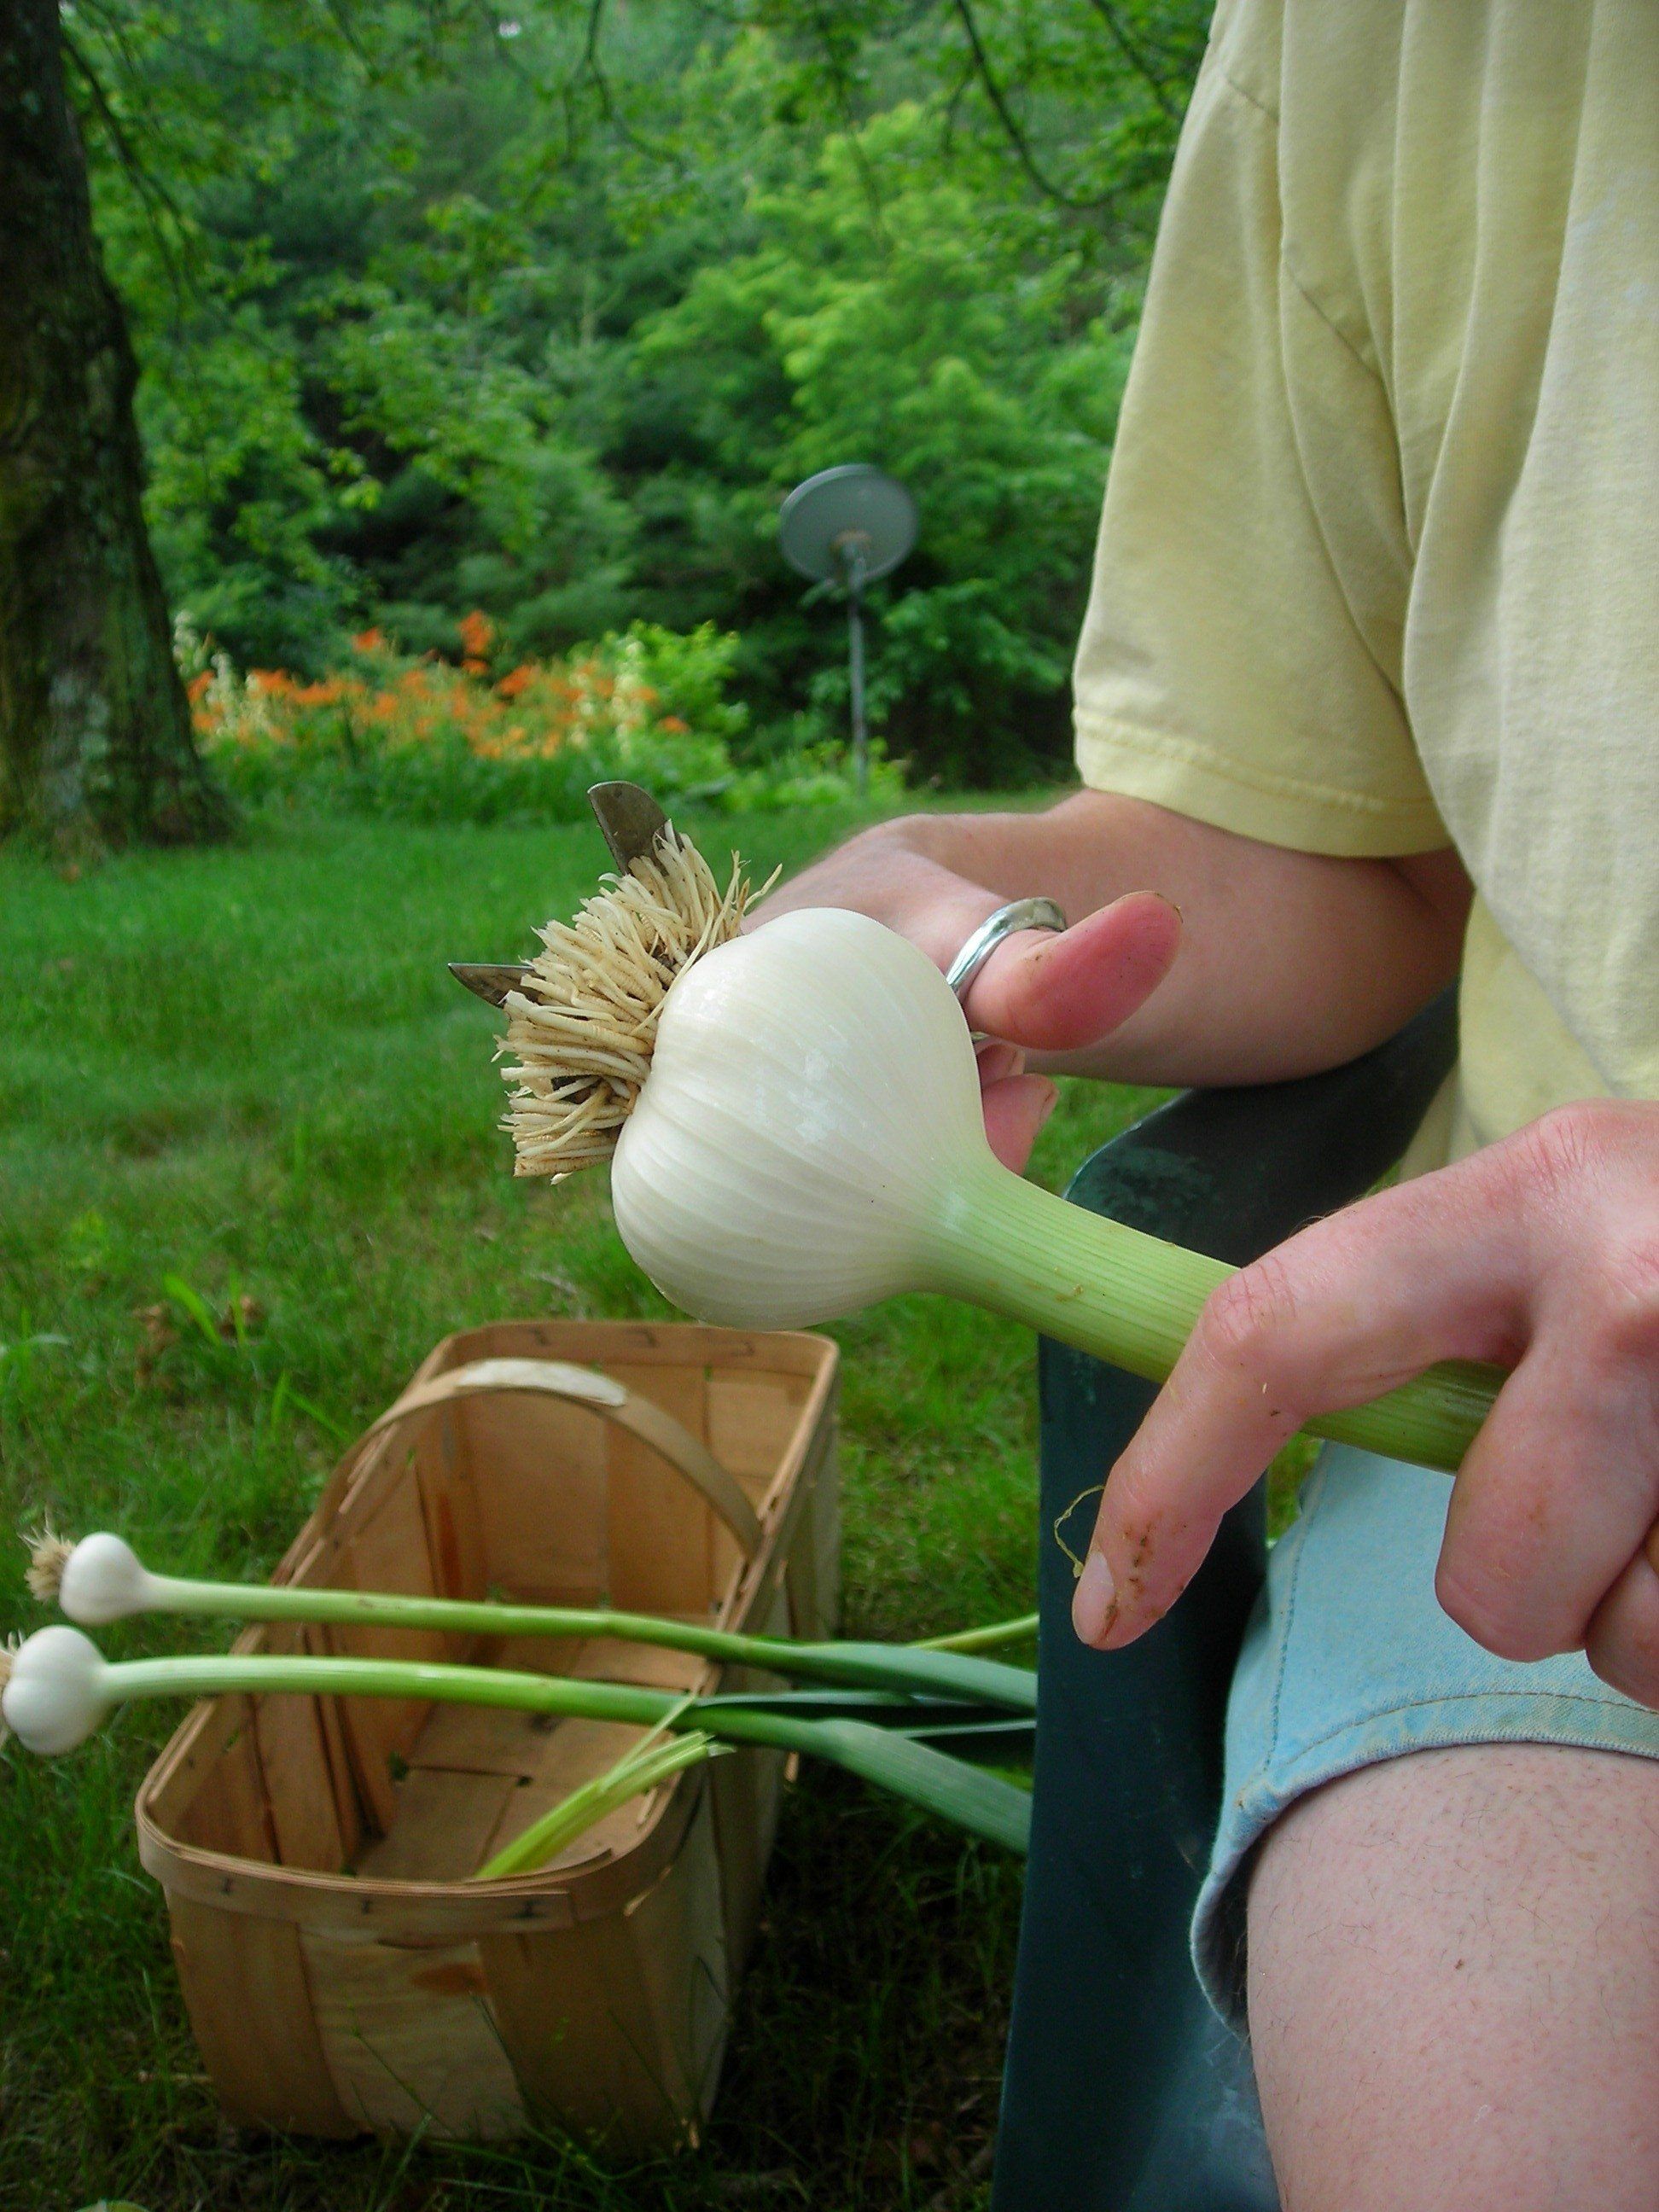 Previous Happening: We have fresh garlic!